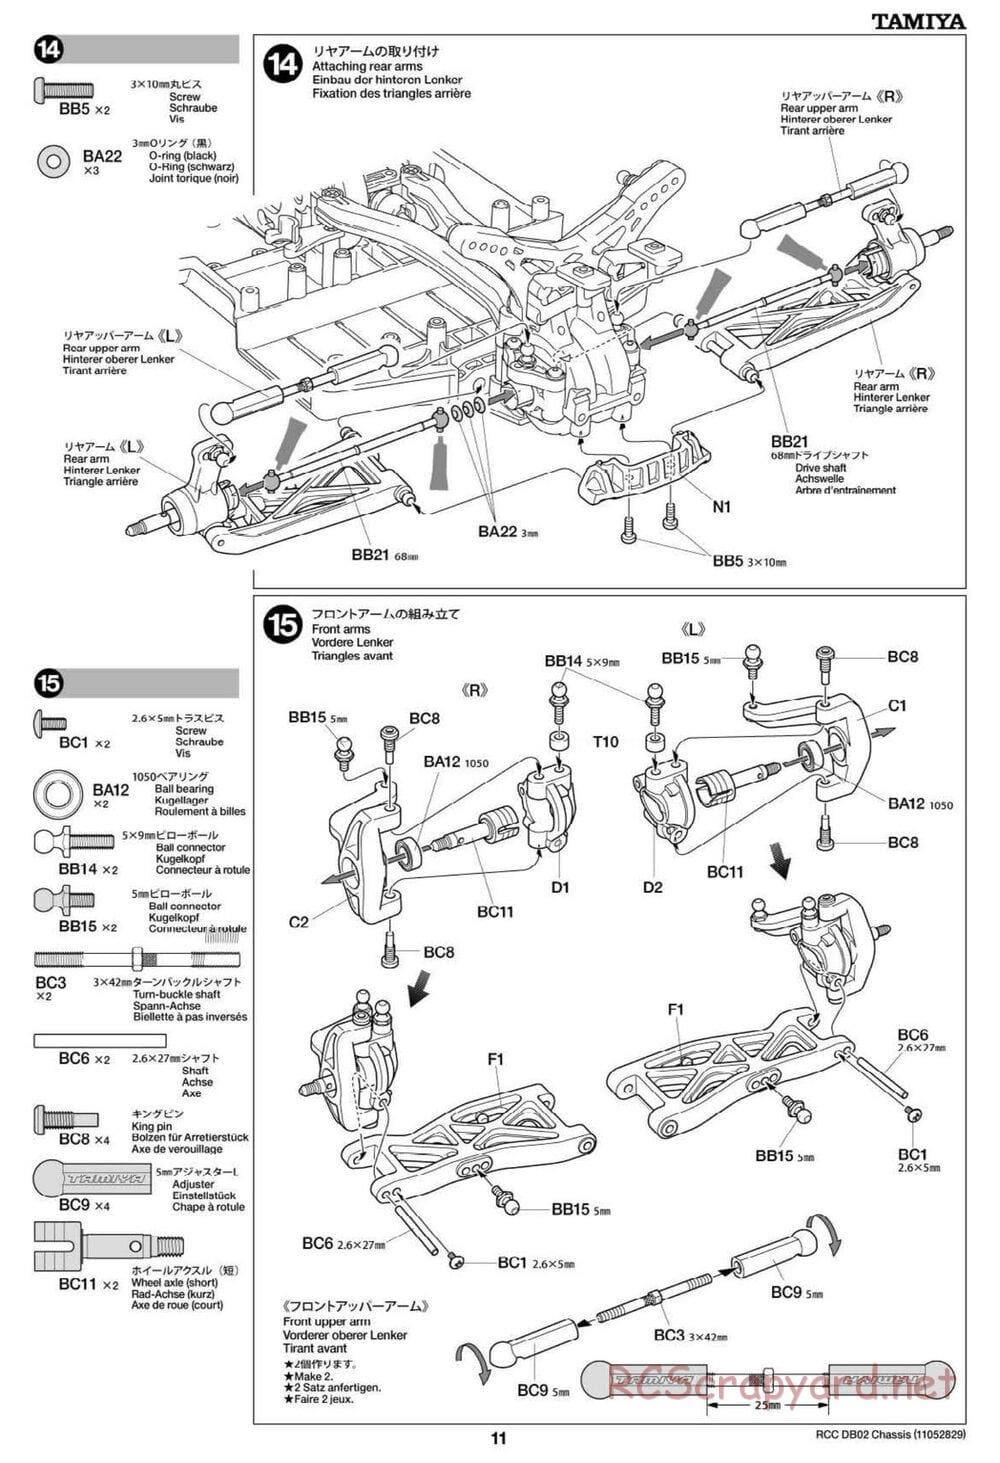 Tamiya - Leonis - DB-02 Chassis - Manual - Page 11